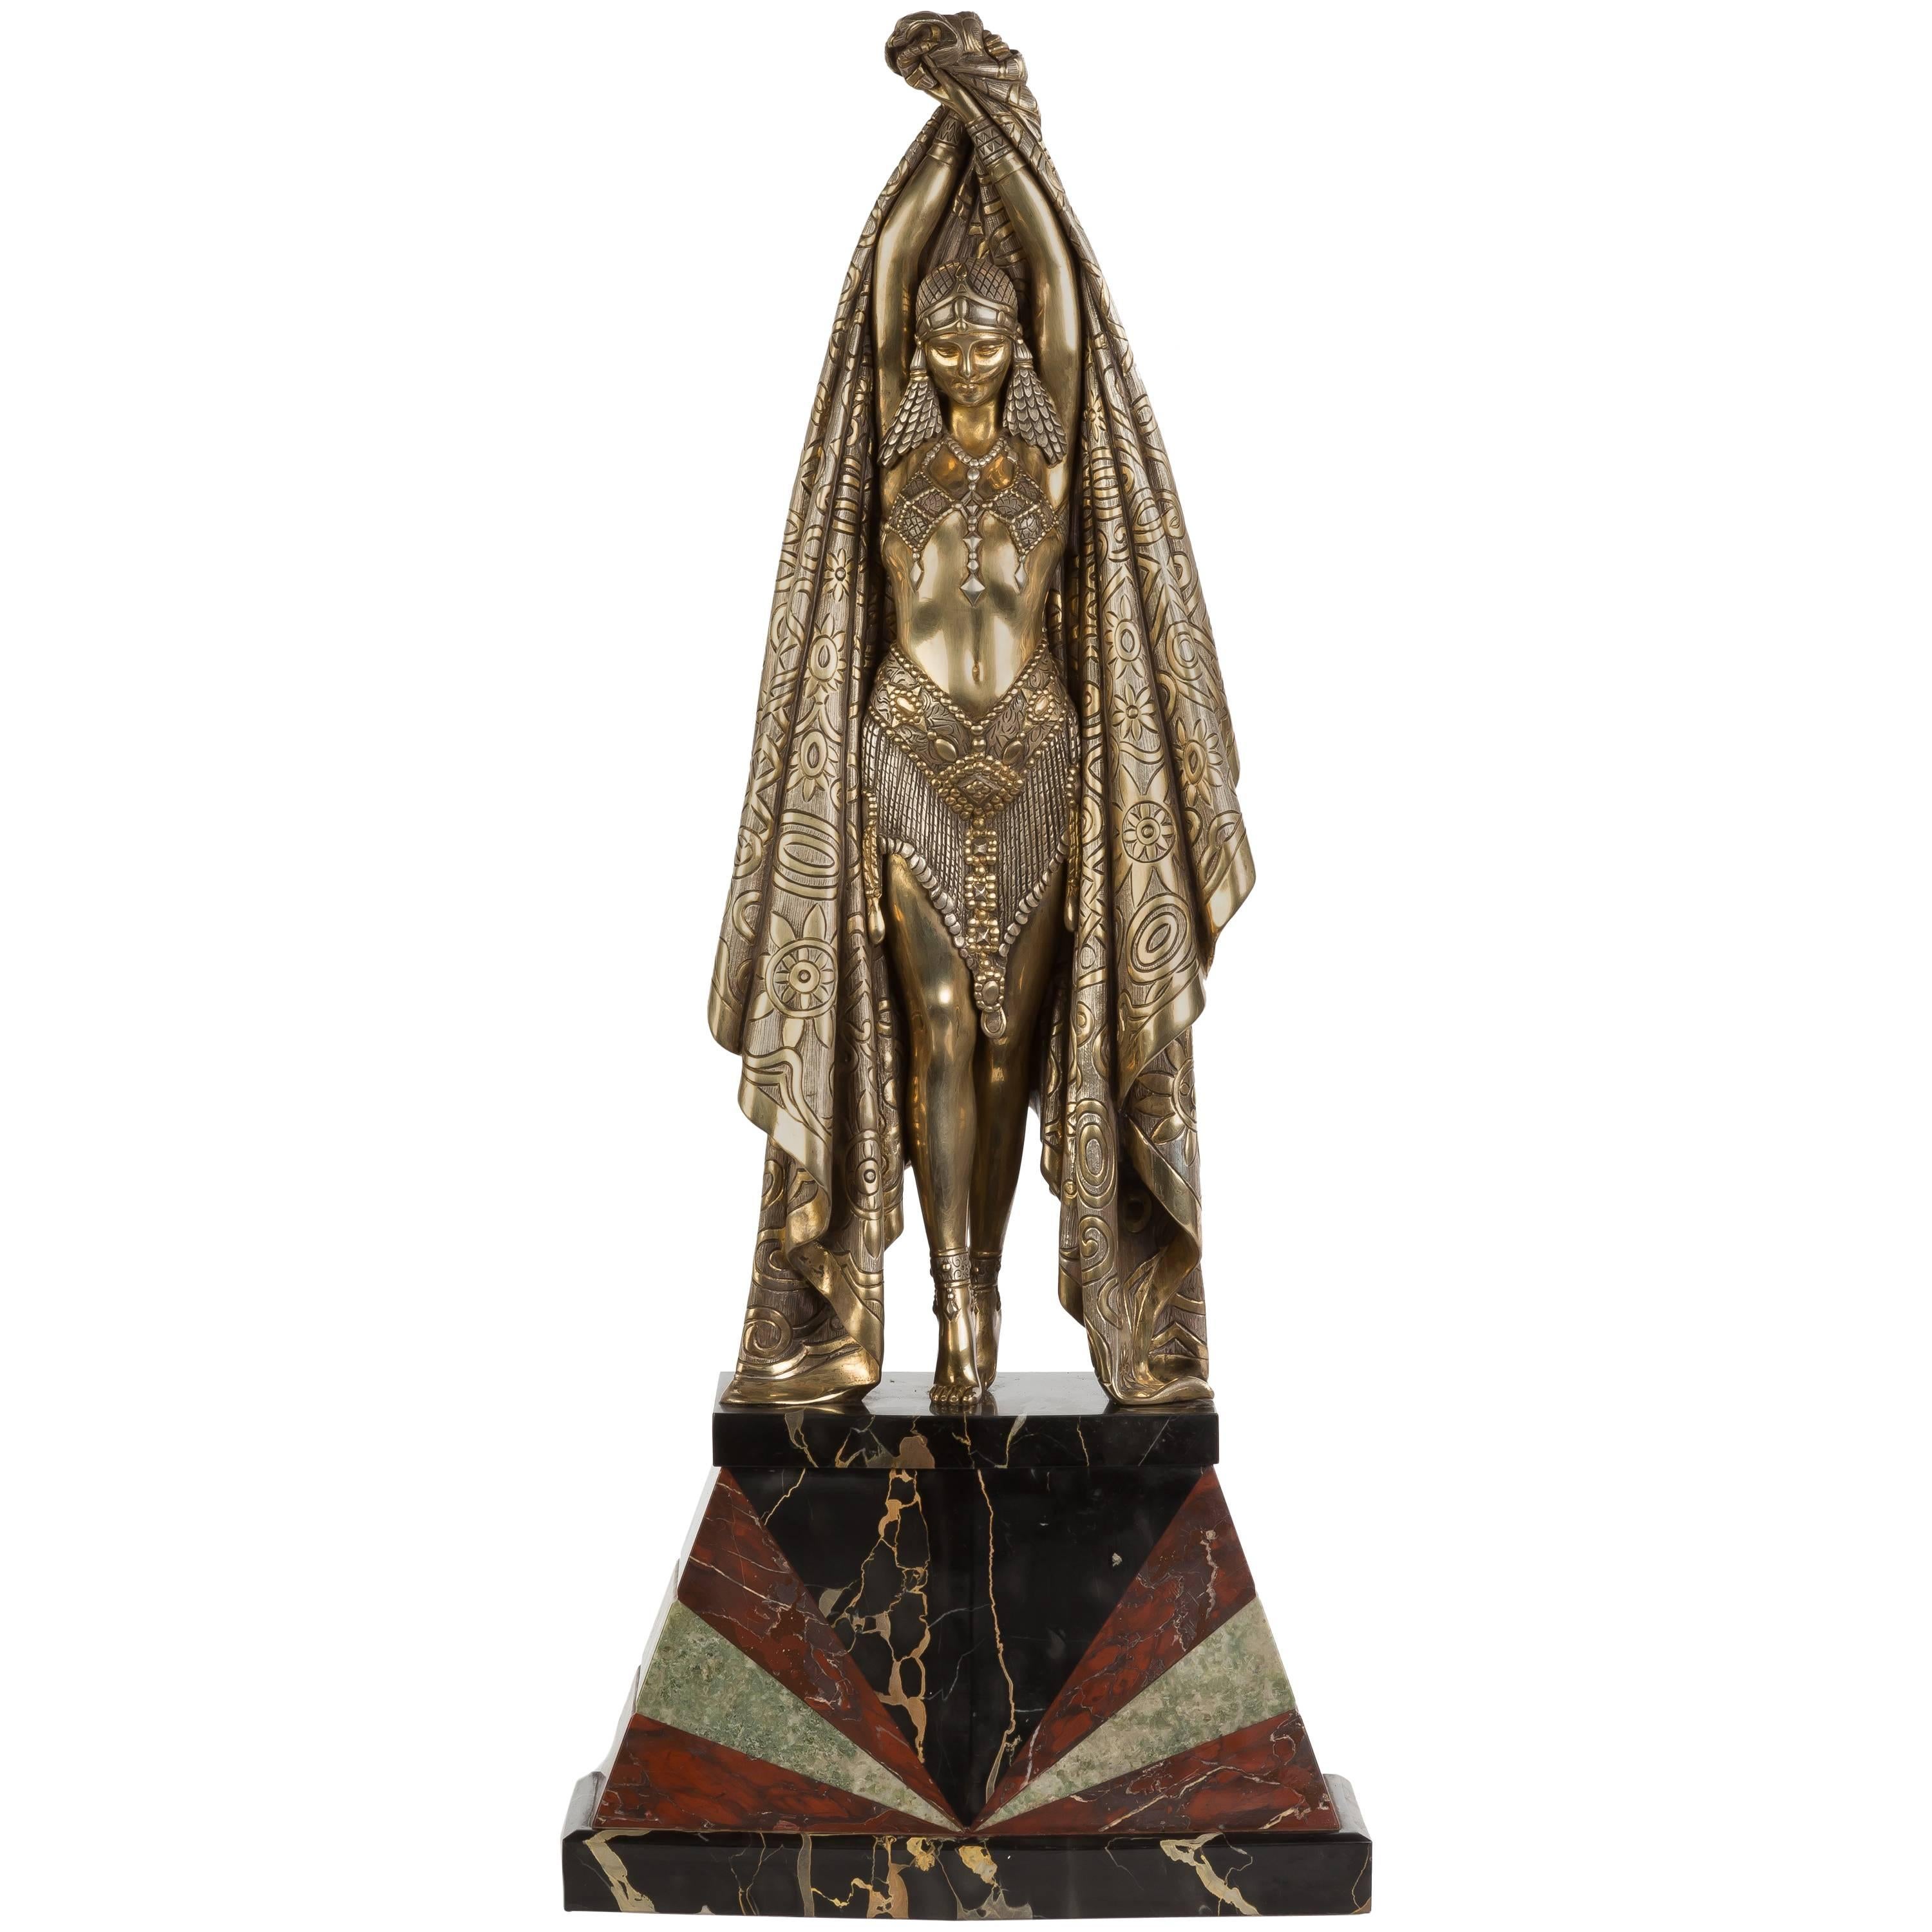 Demetre Chiparus Art Deco Bronze Sculpture "Antinea", circa 1925